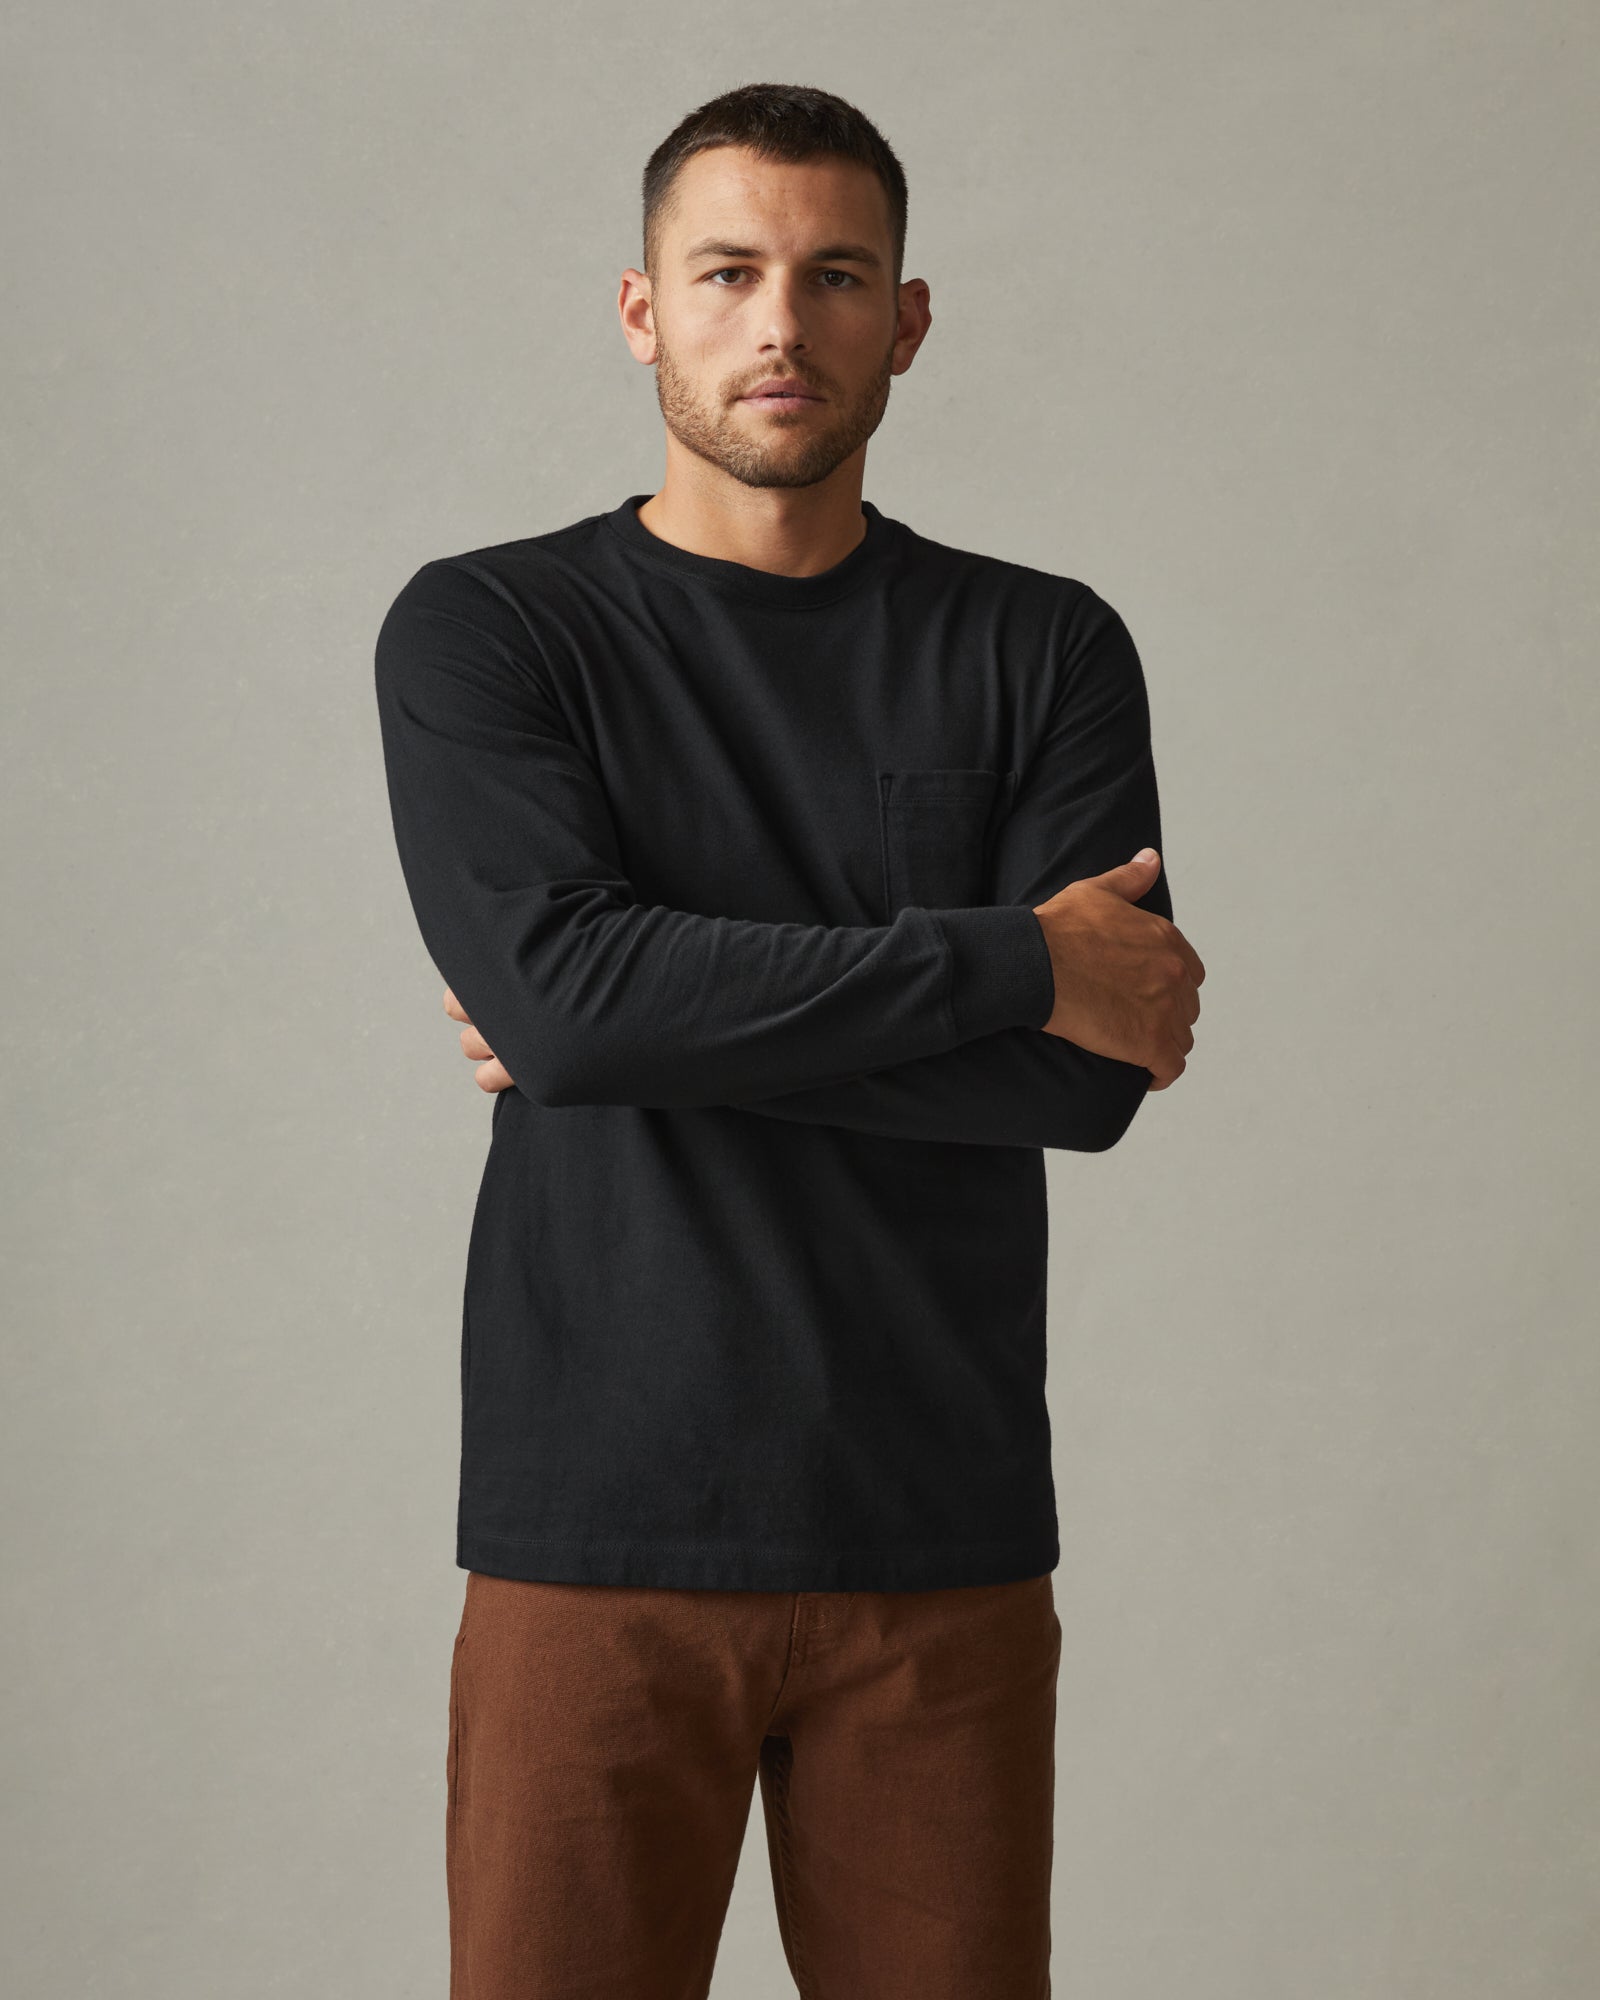 Long Sleeve Heavyweight 100% Cotton T-Shirt - Made in USA